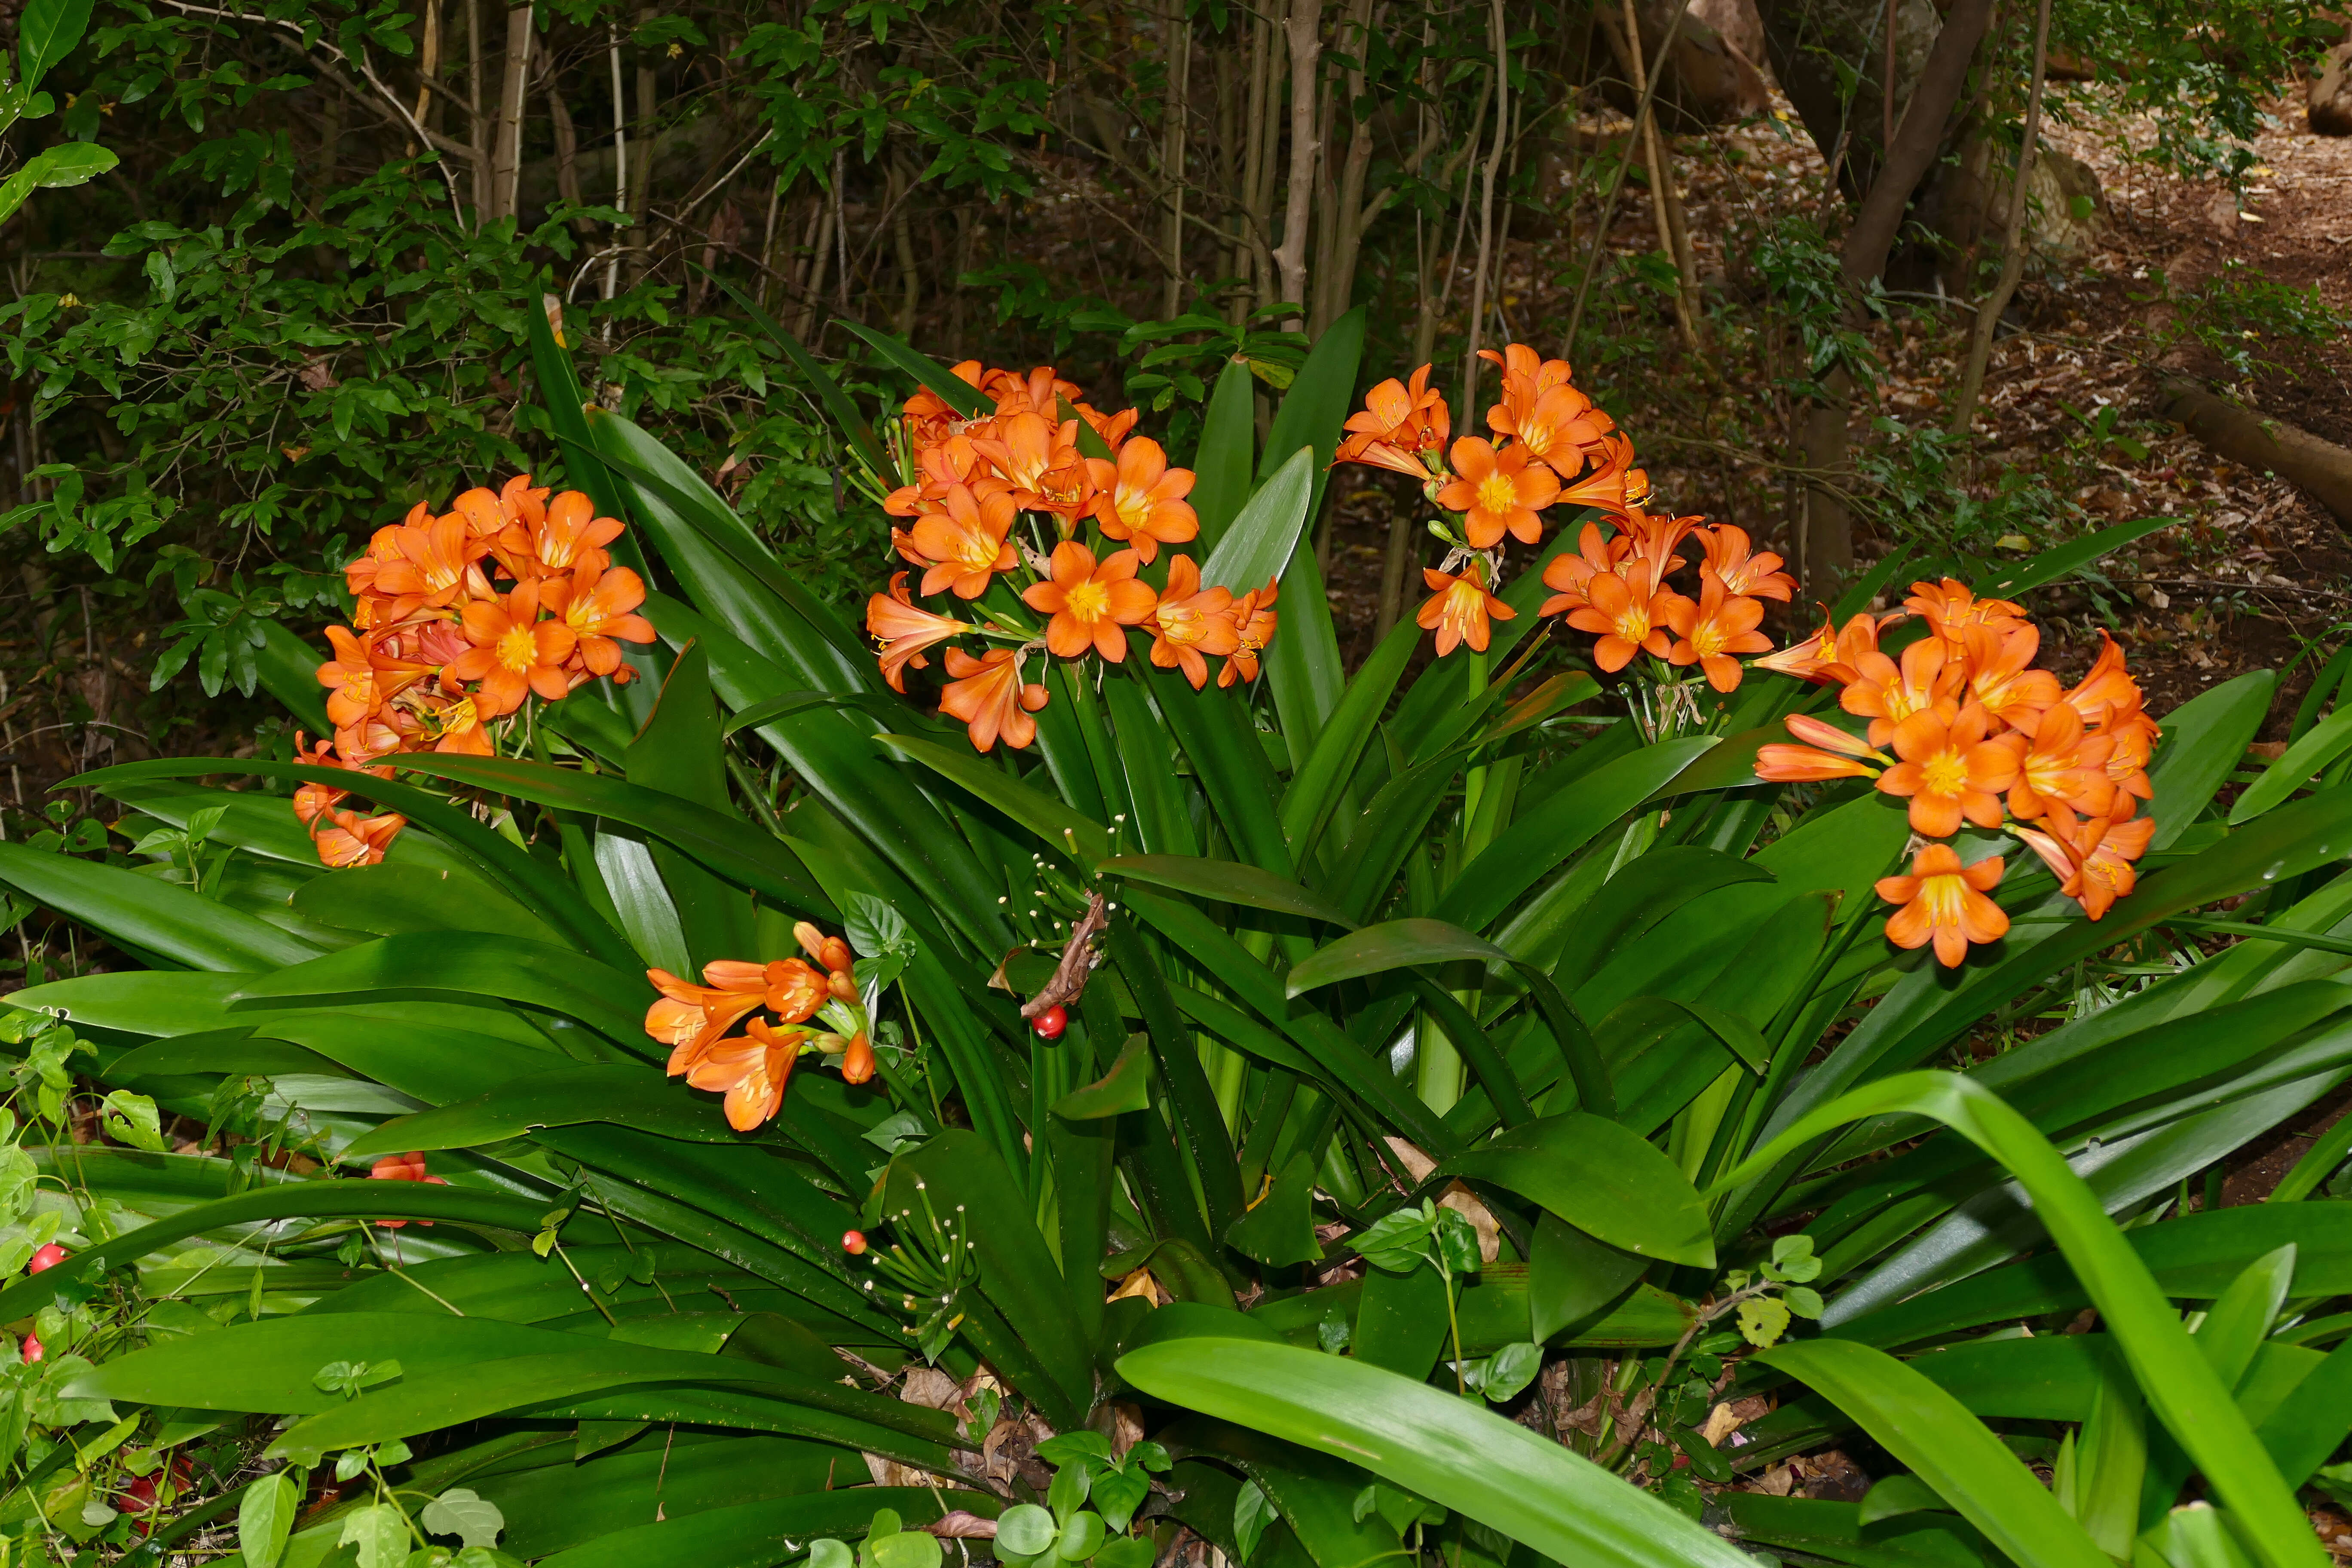 Image of Bush Lily